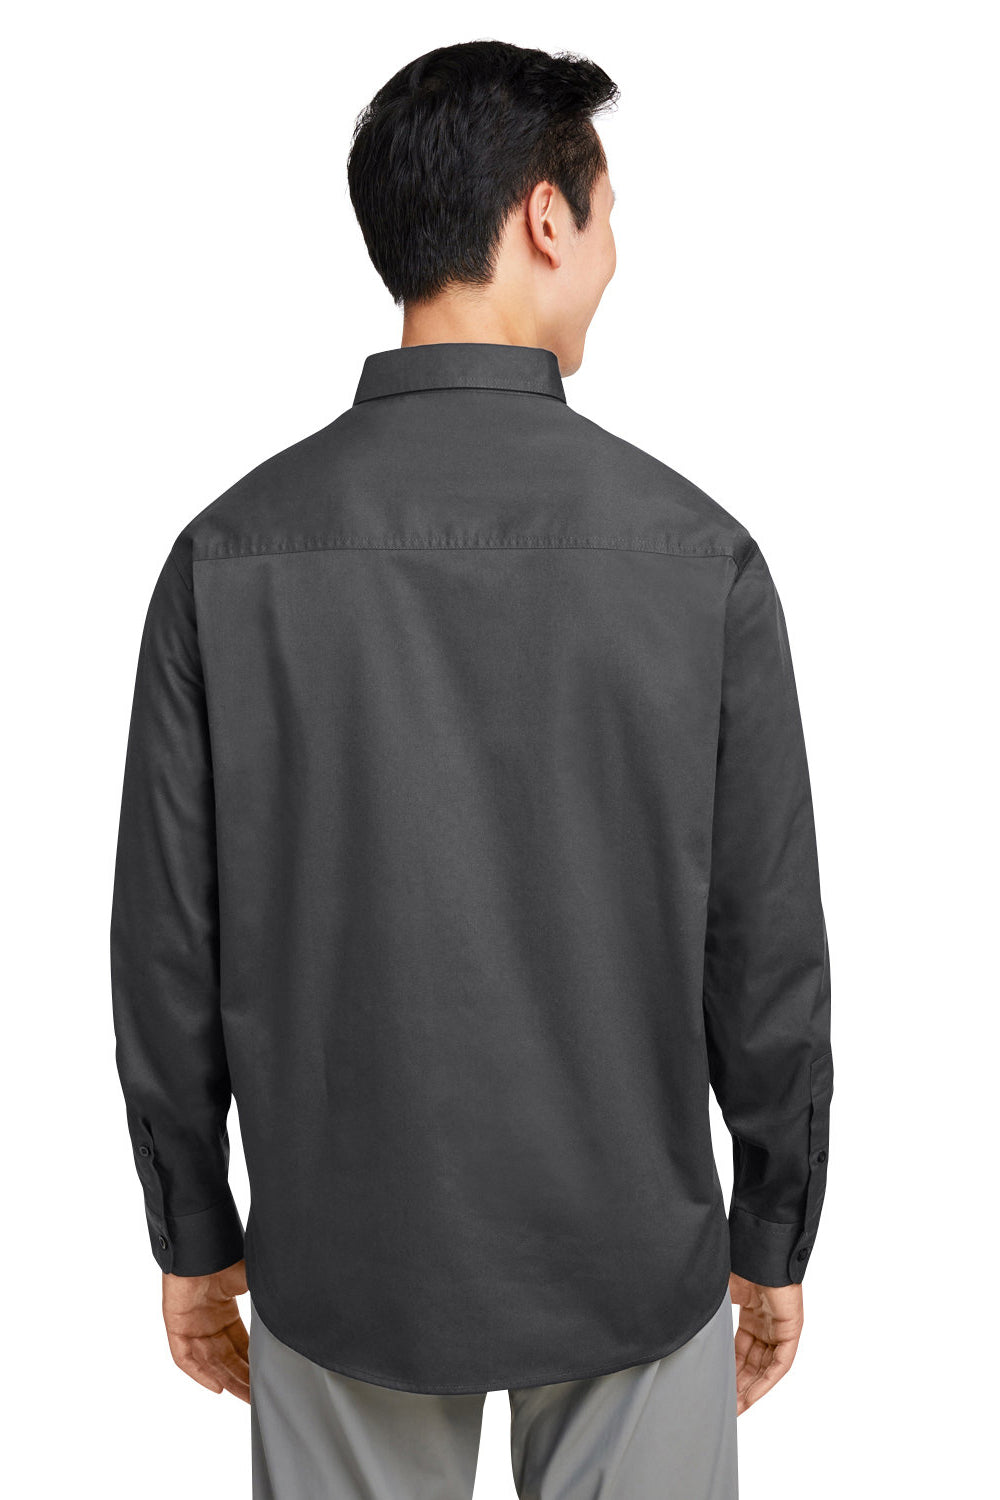 Harriton M585L Mens Advantage Long Sleeve Button Down Shirt w/ Double Pockets Dark Charcoal Grey Back